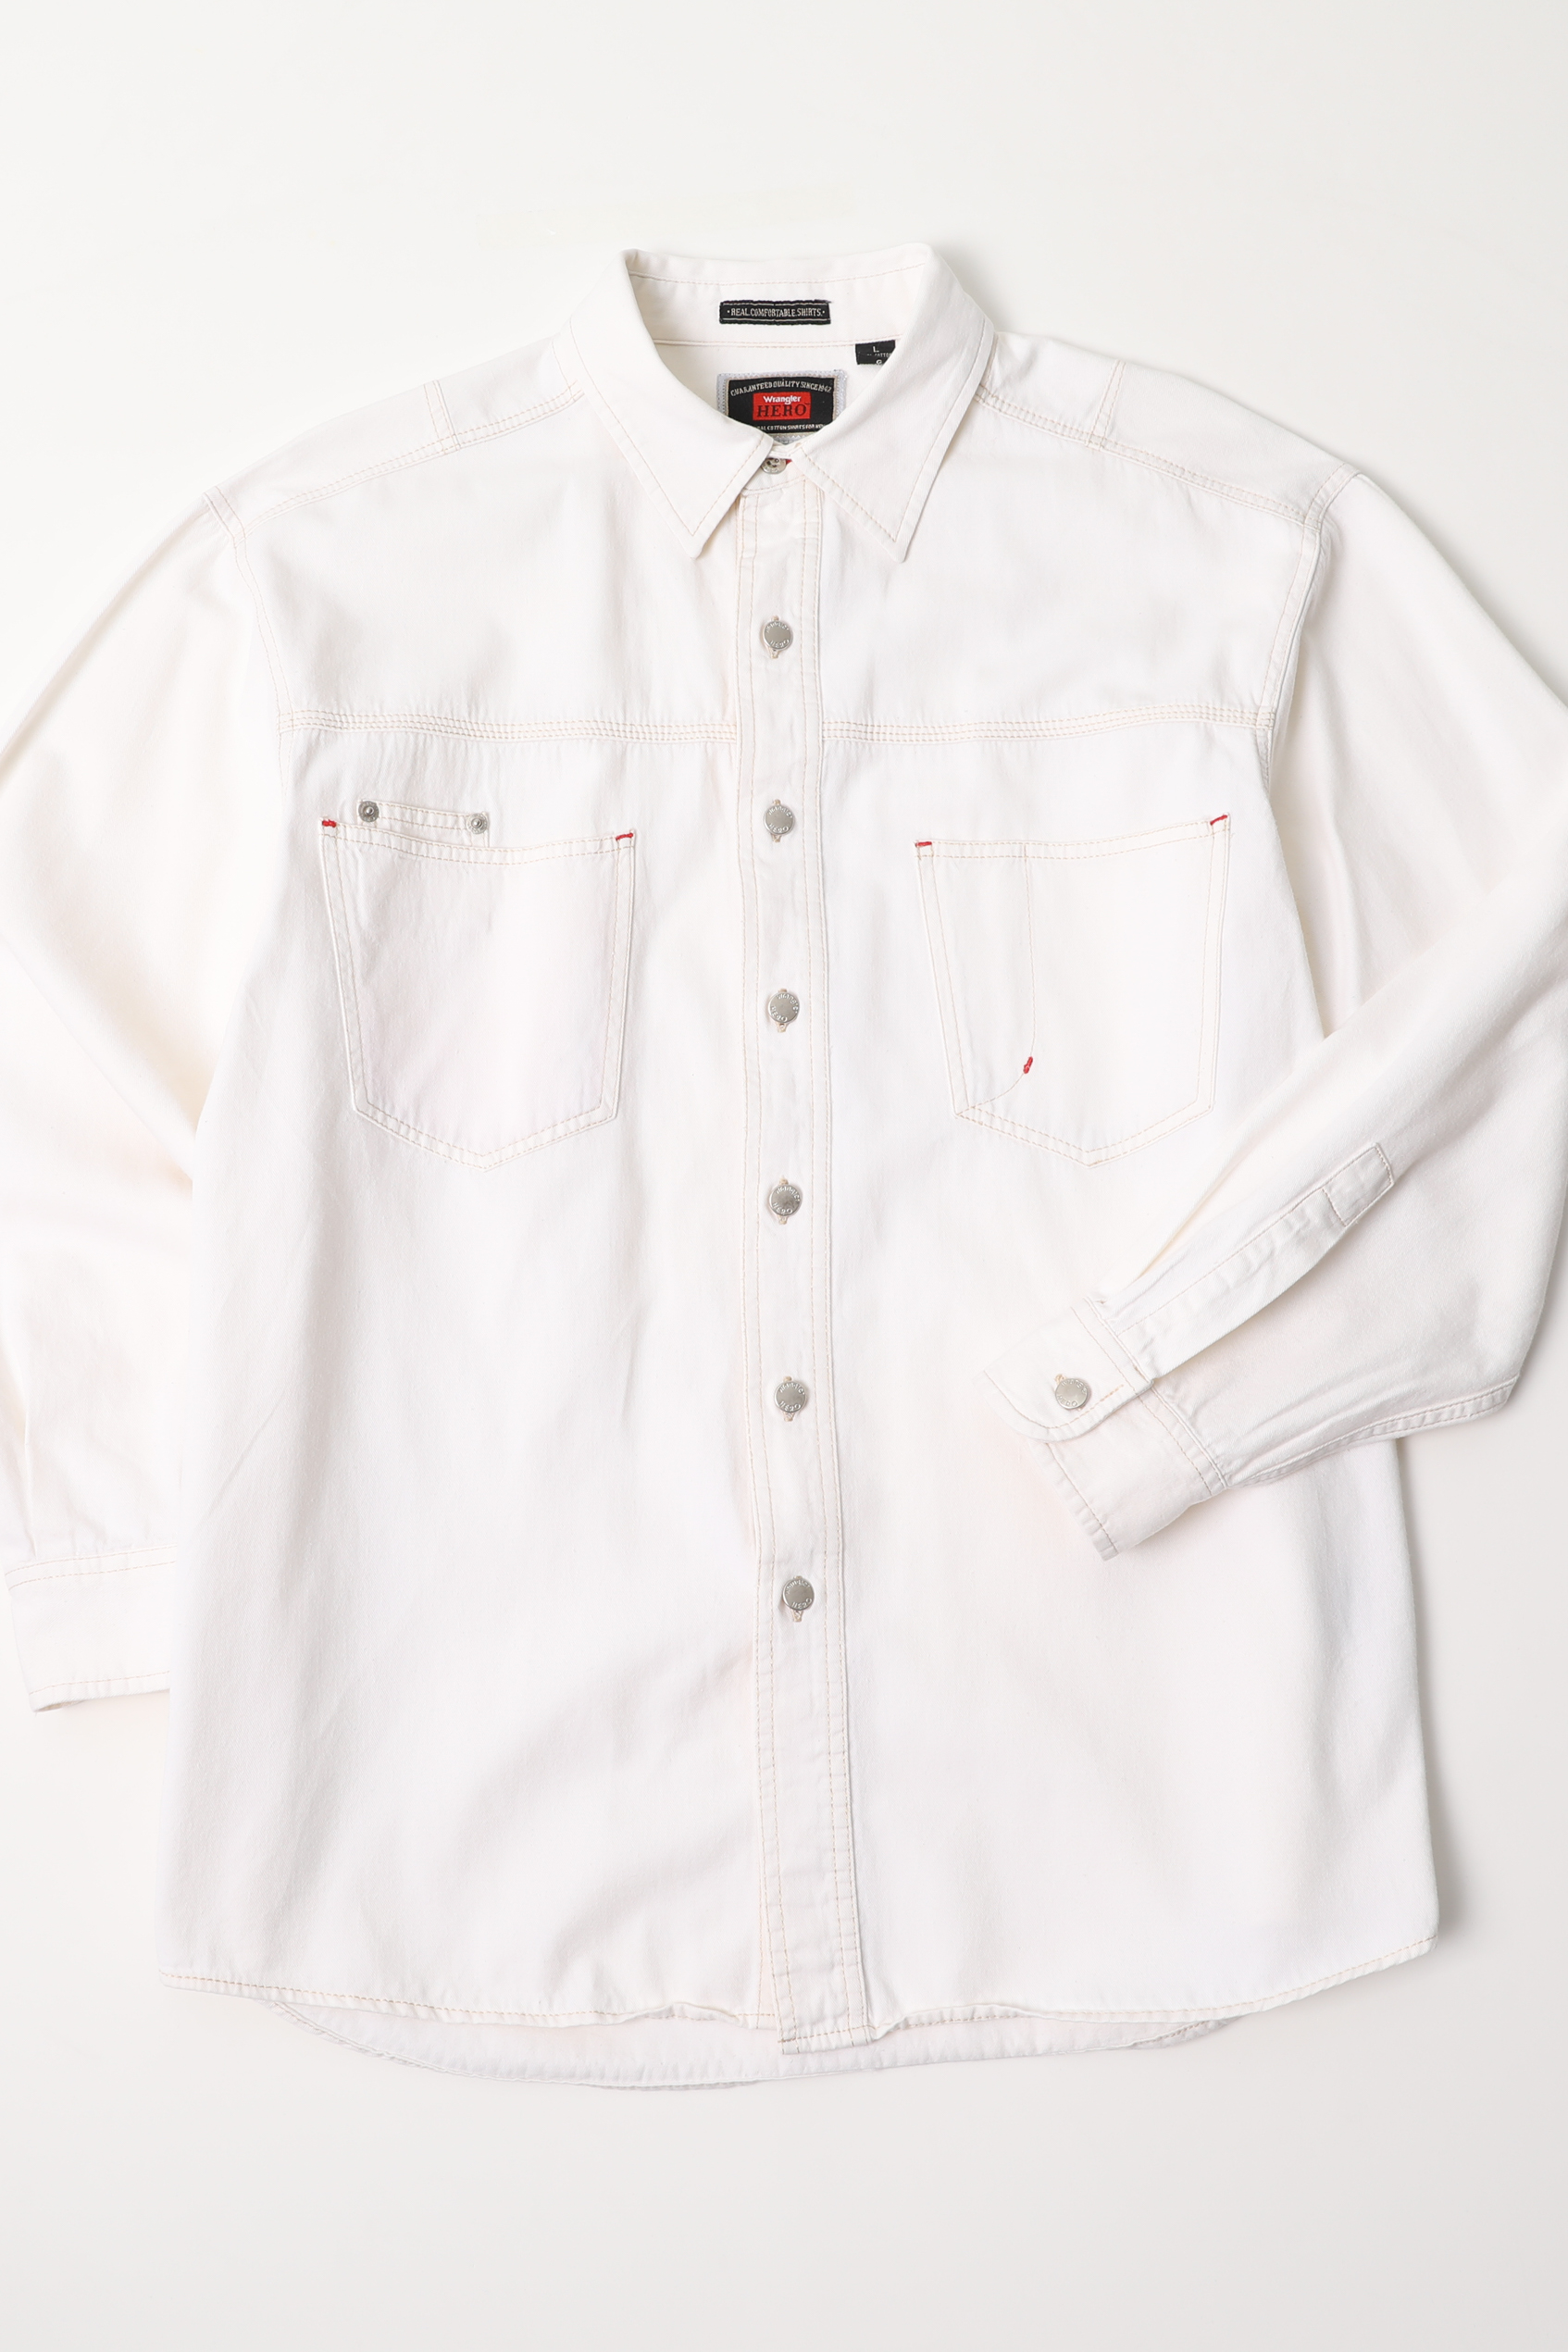 [L] 랭글러 투 포켓 스티치 코튼 셔츠 (H674)